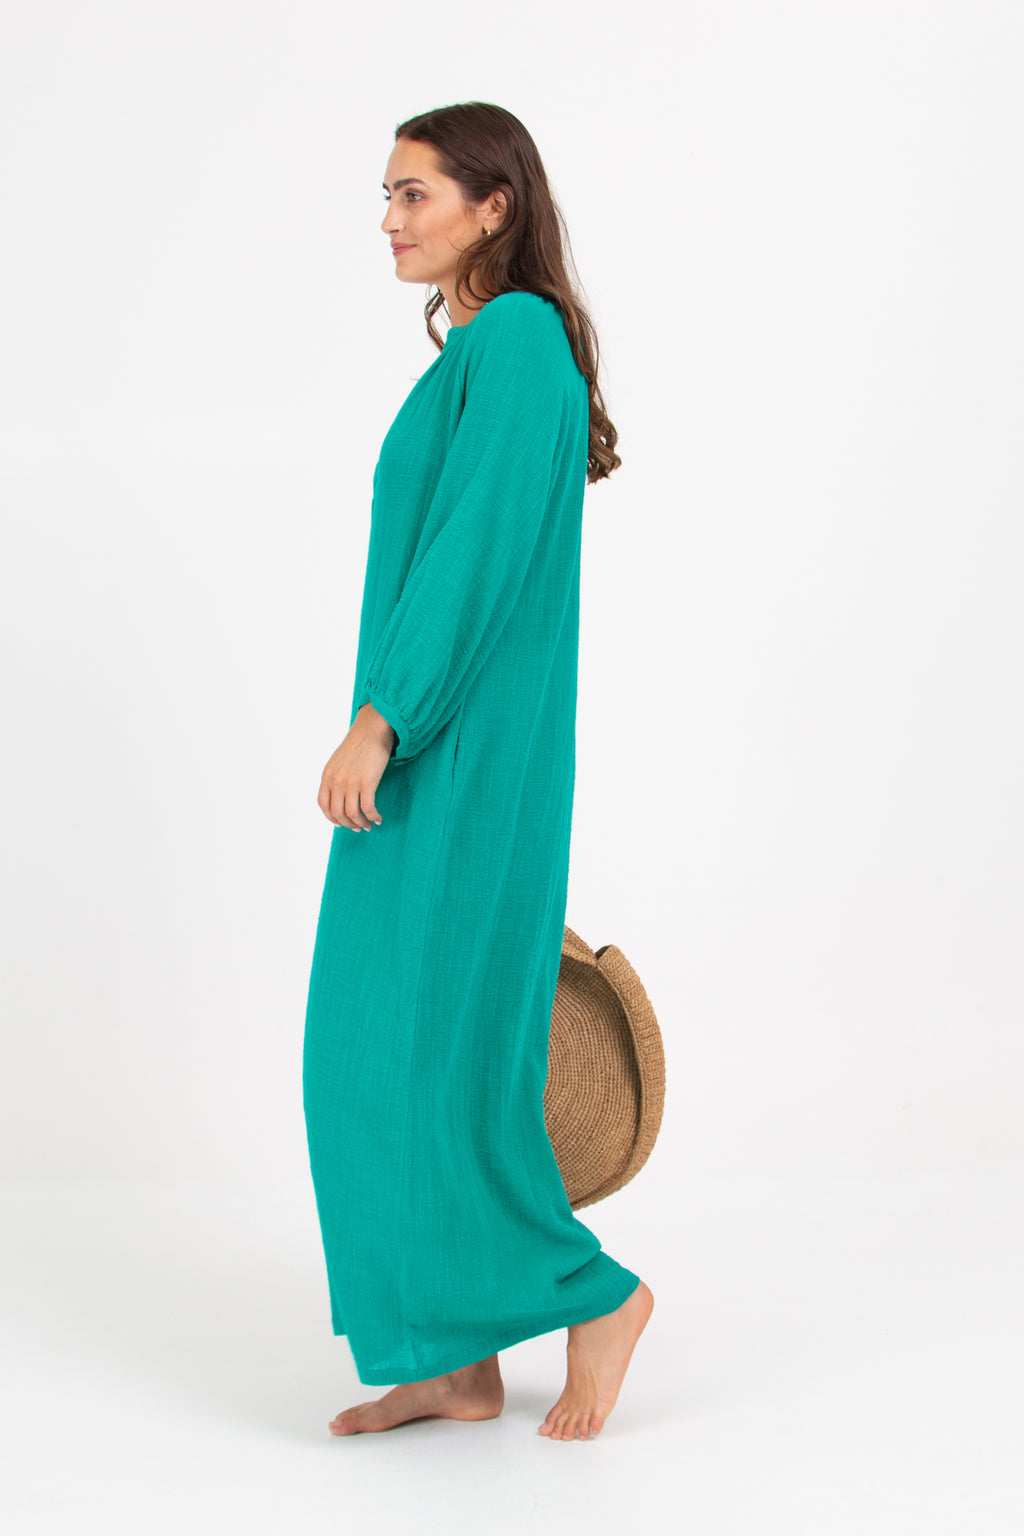 Claudette long emerald dress